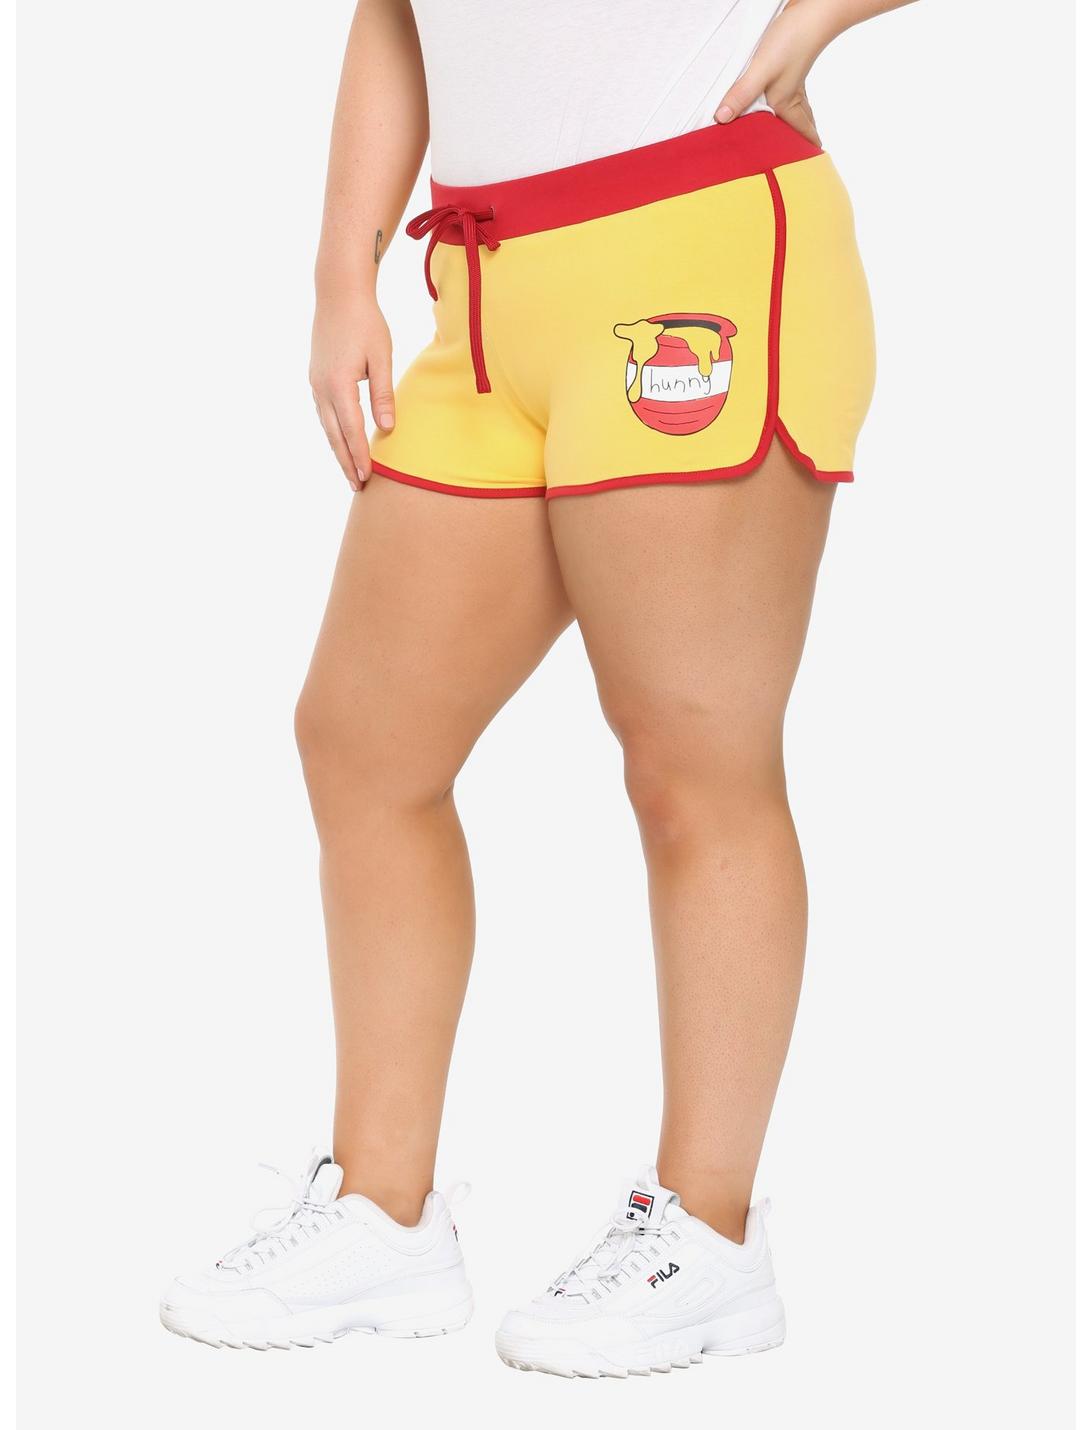 Disney Winnie The Pooh Girls Soft Shorts Plus Size, YELLOW, hi-res